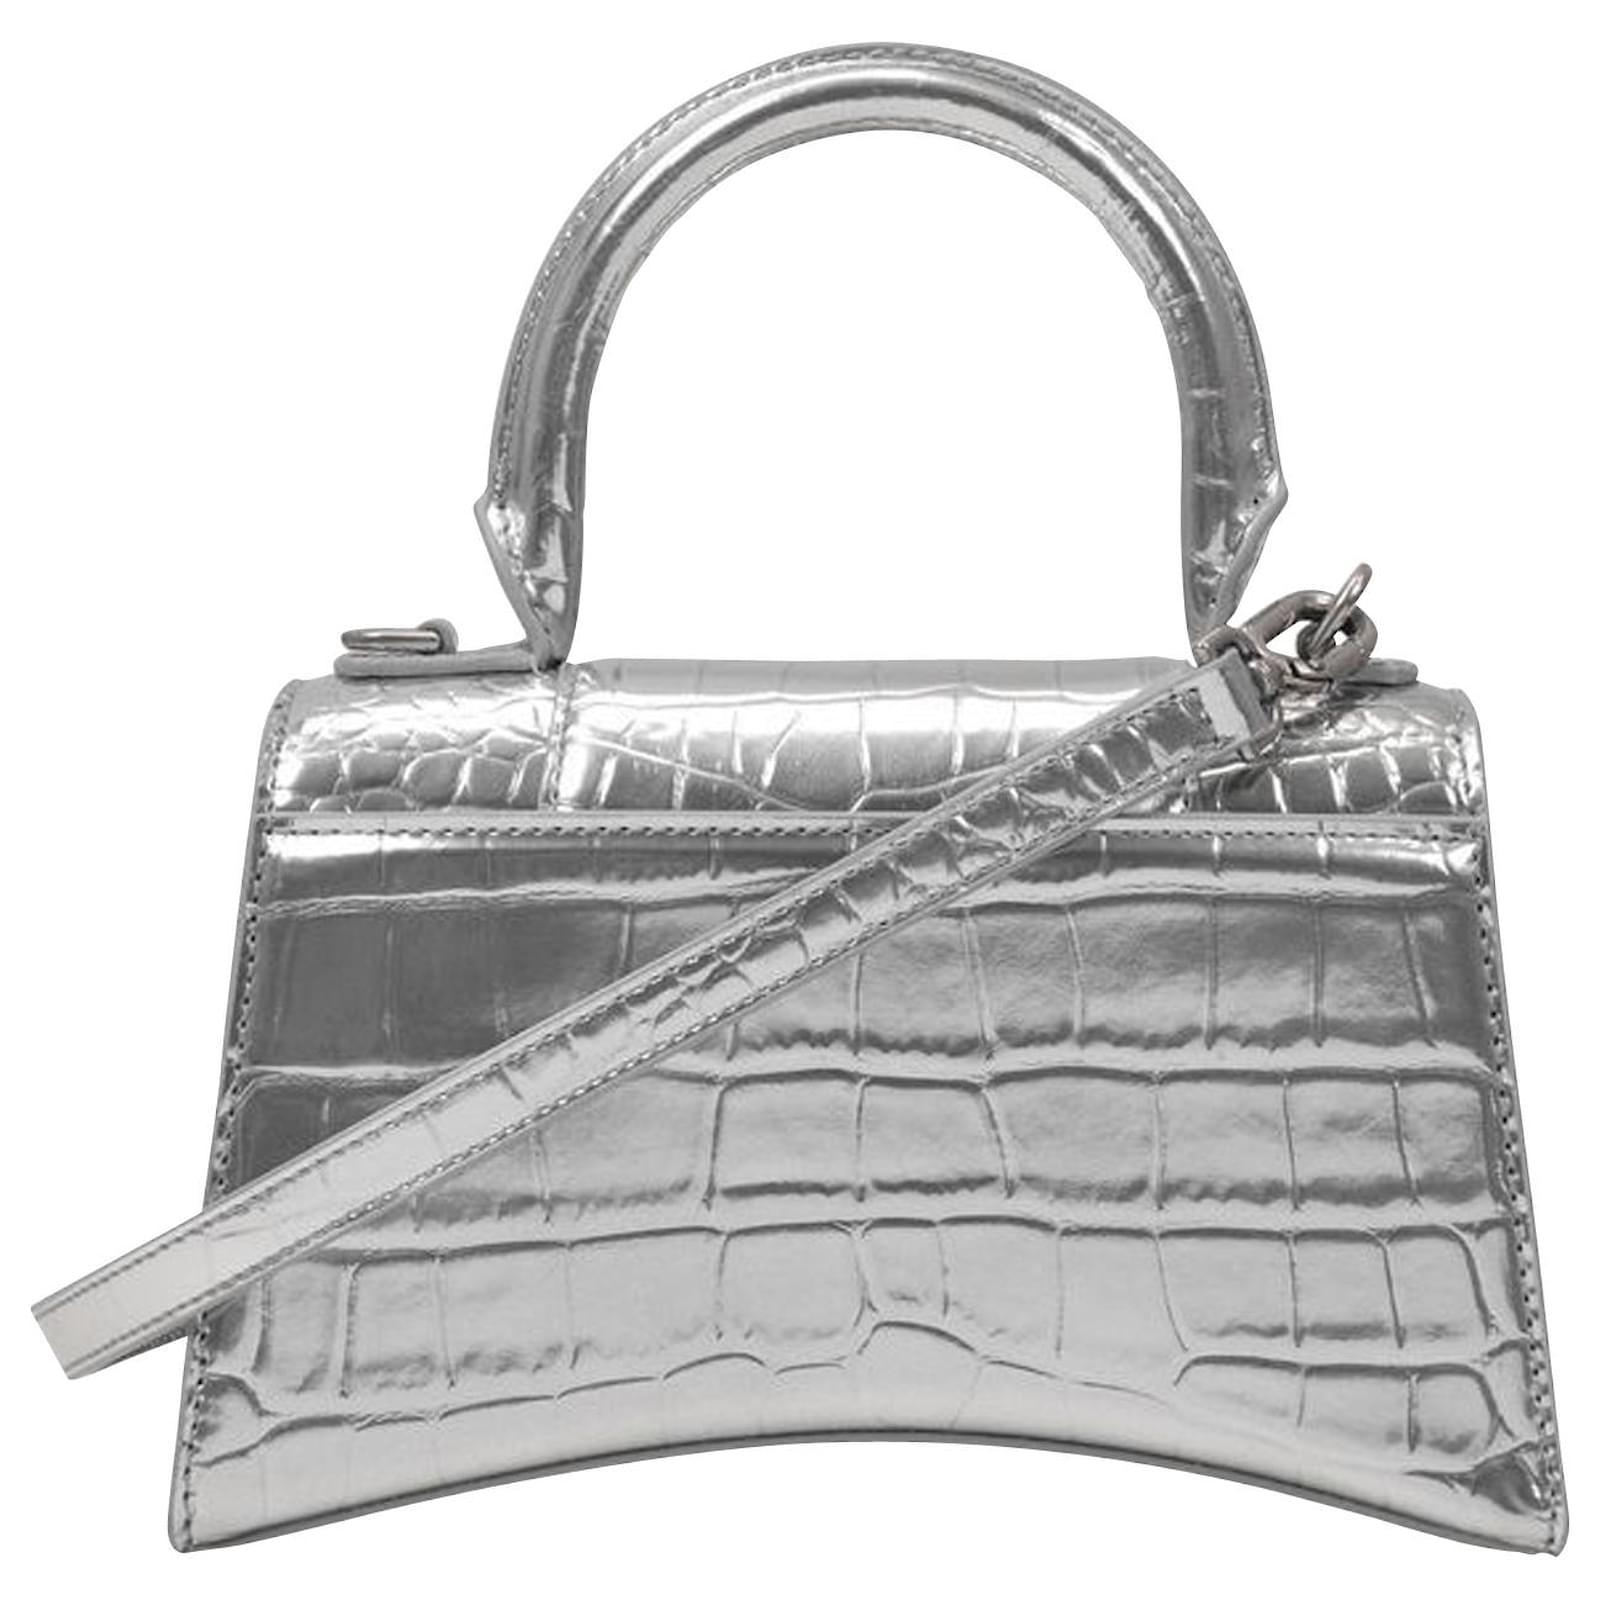 Balenciaga Hourglass Small Metallic Silver Satchel Bag Designer Italian